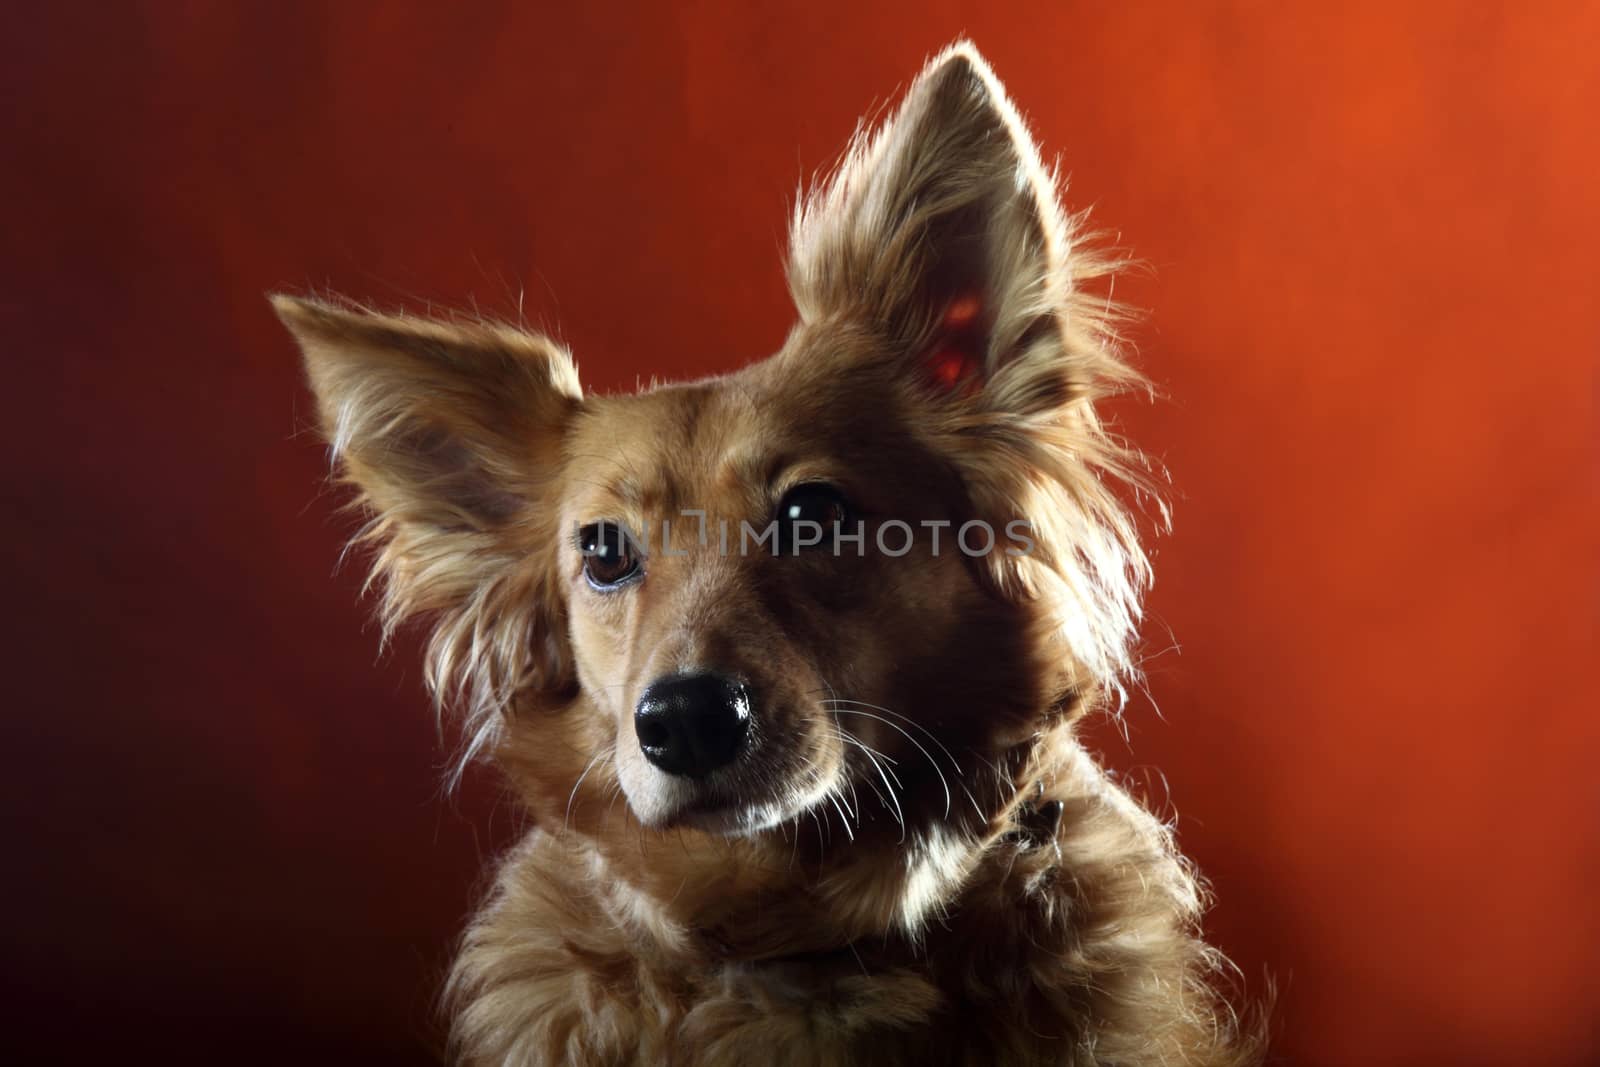 Italian mongrel dog fur gold, copper and black